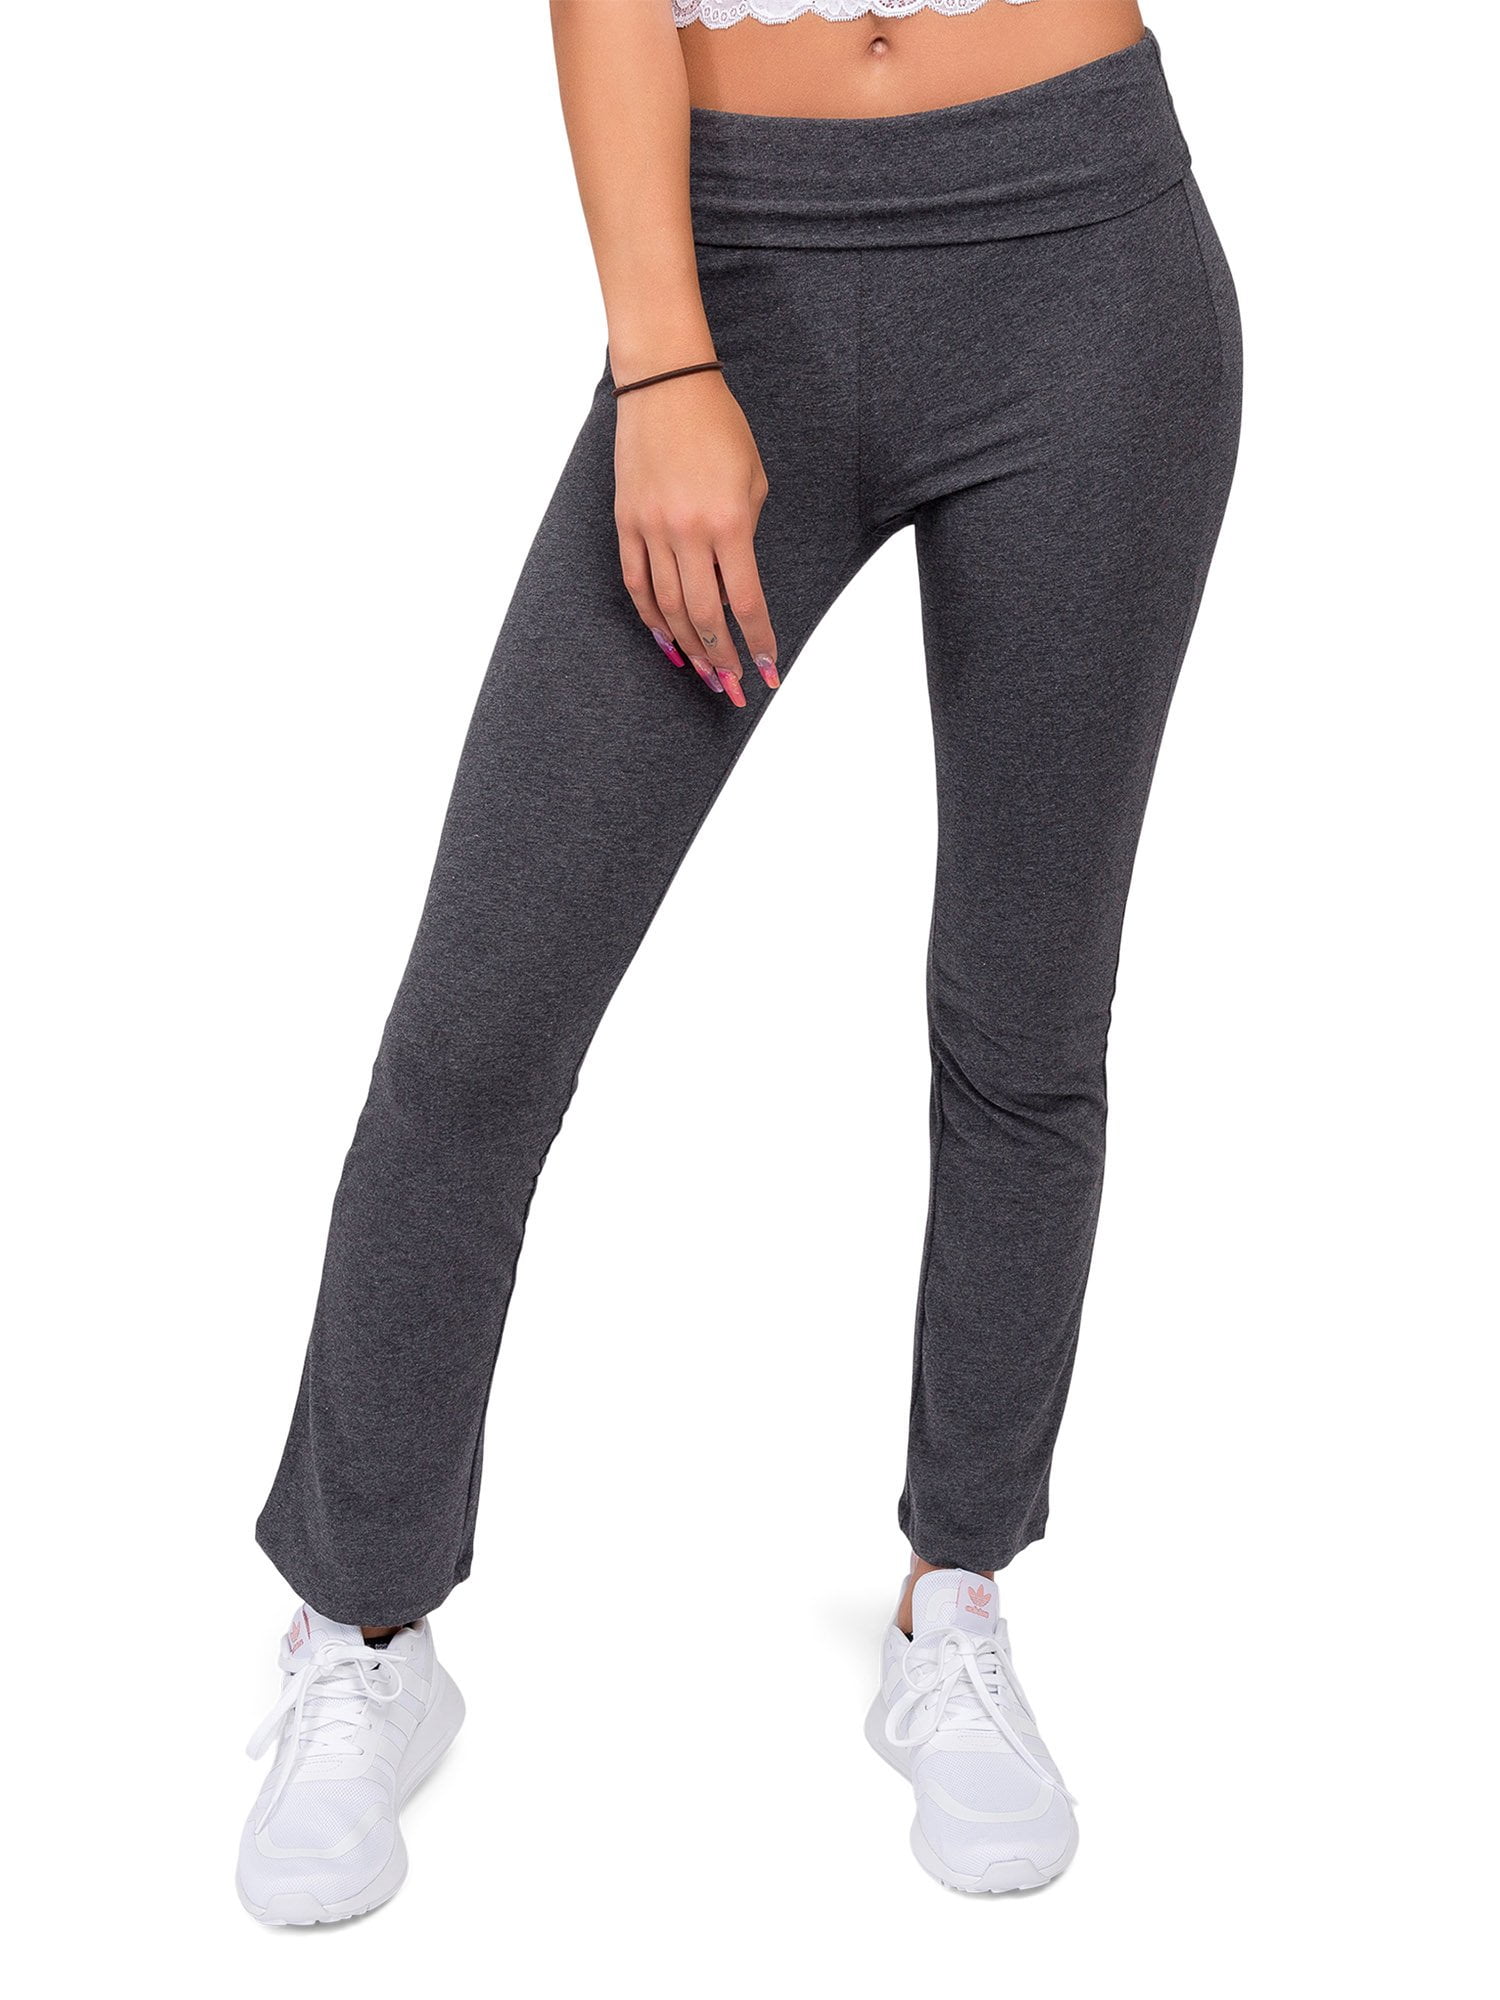 G-Style USA Women's Bootcut Flare Leggings Yoga Pants 8150 - Charcoal Gray  - Medium 